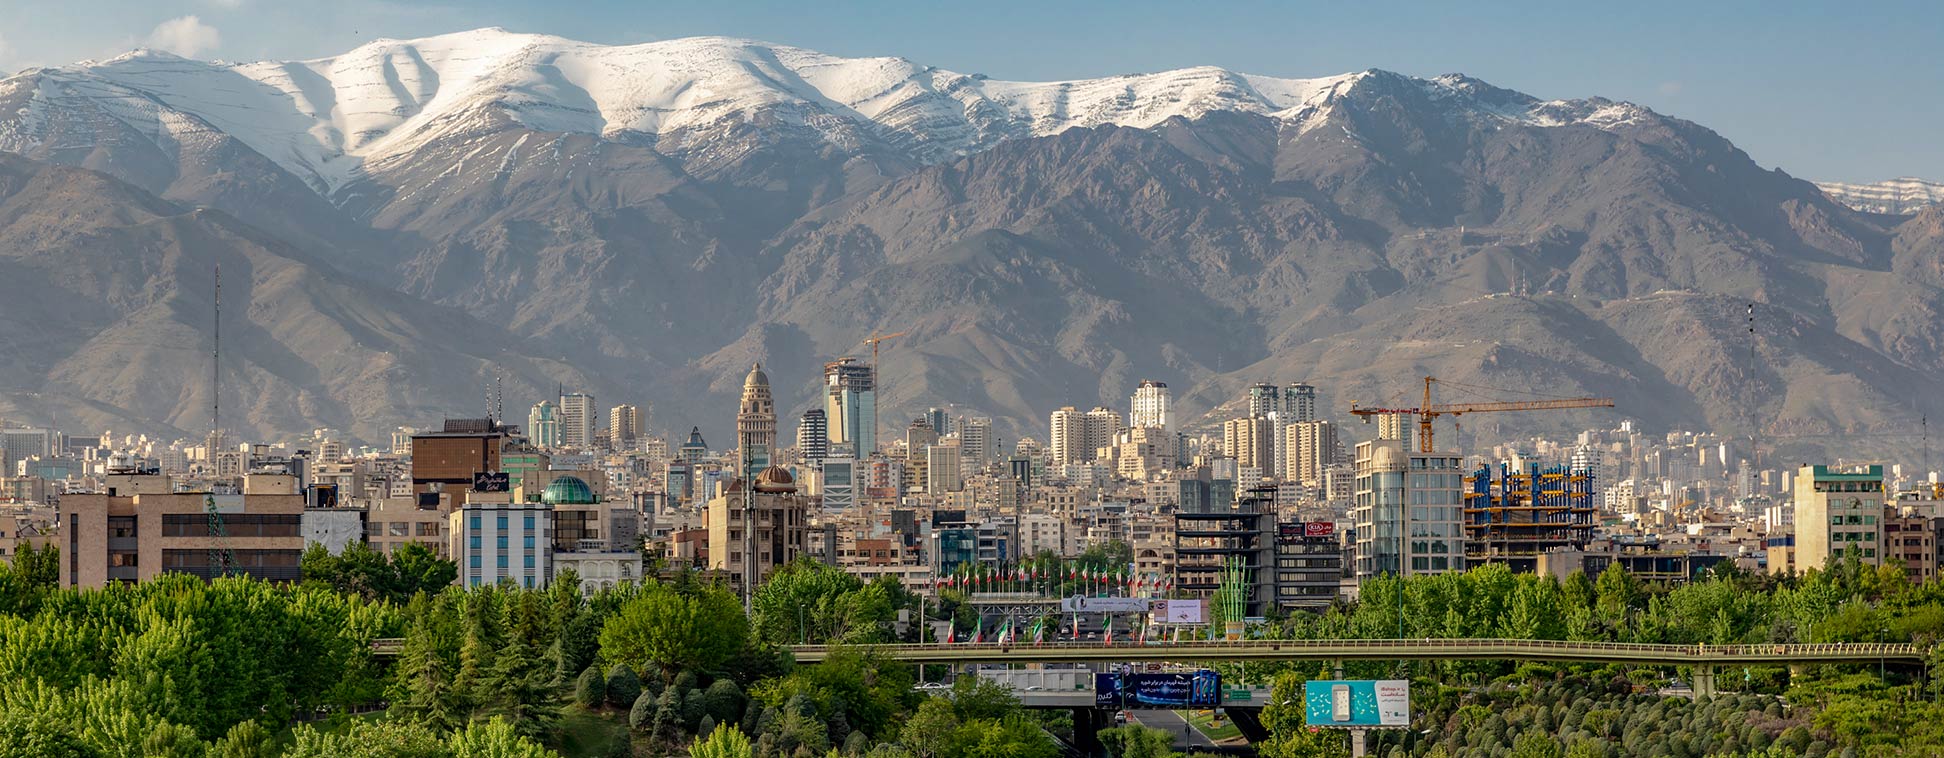 Skyline of Tehran with Alborz mountain range in the background